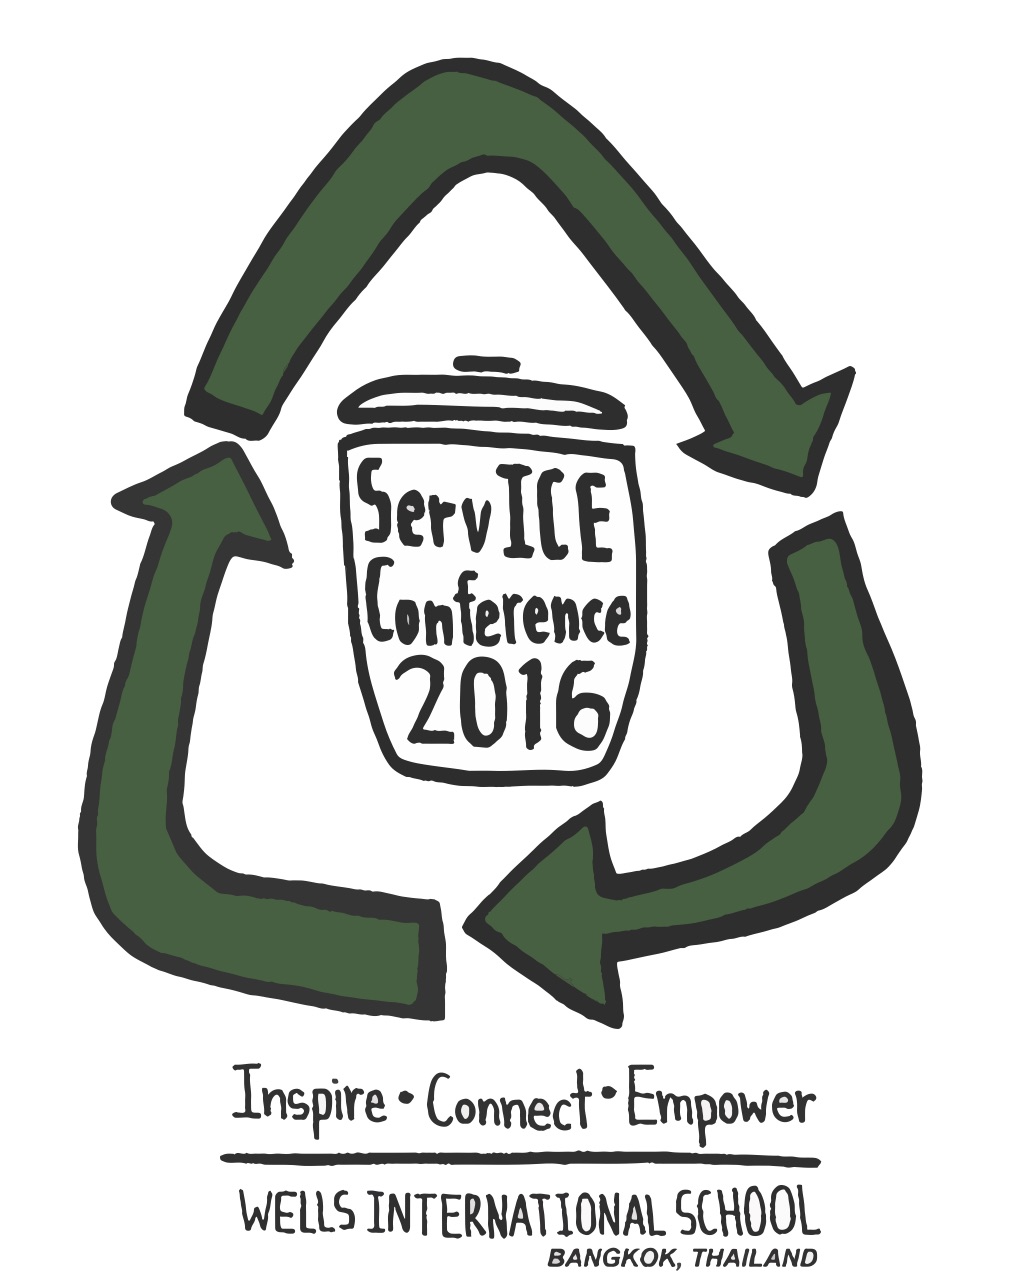 ServICE Logo